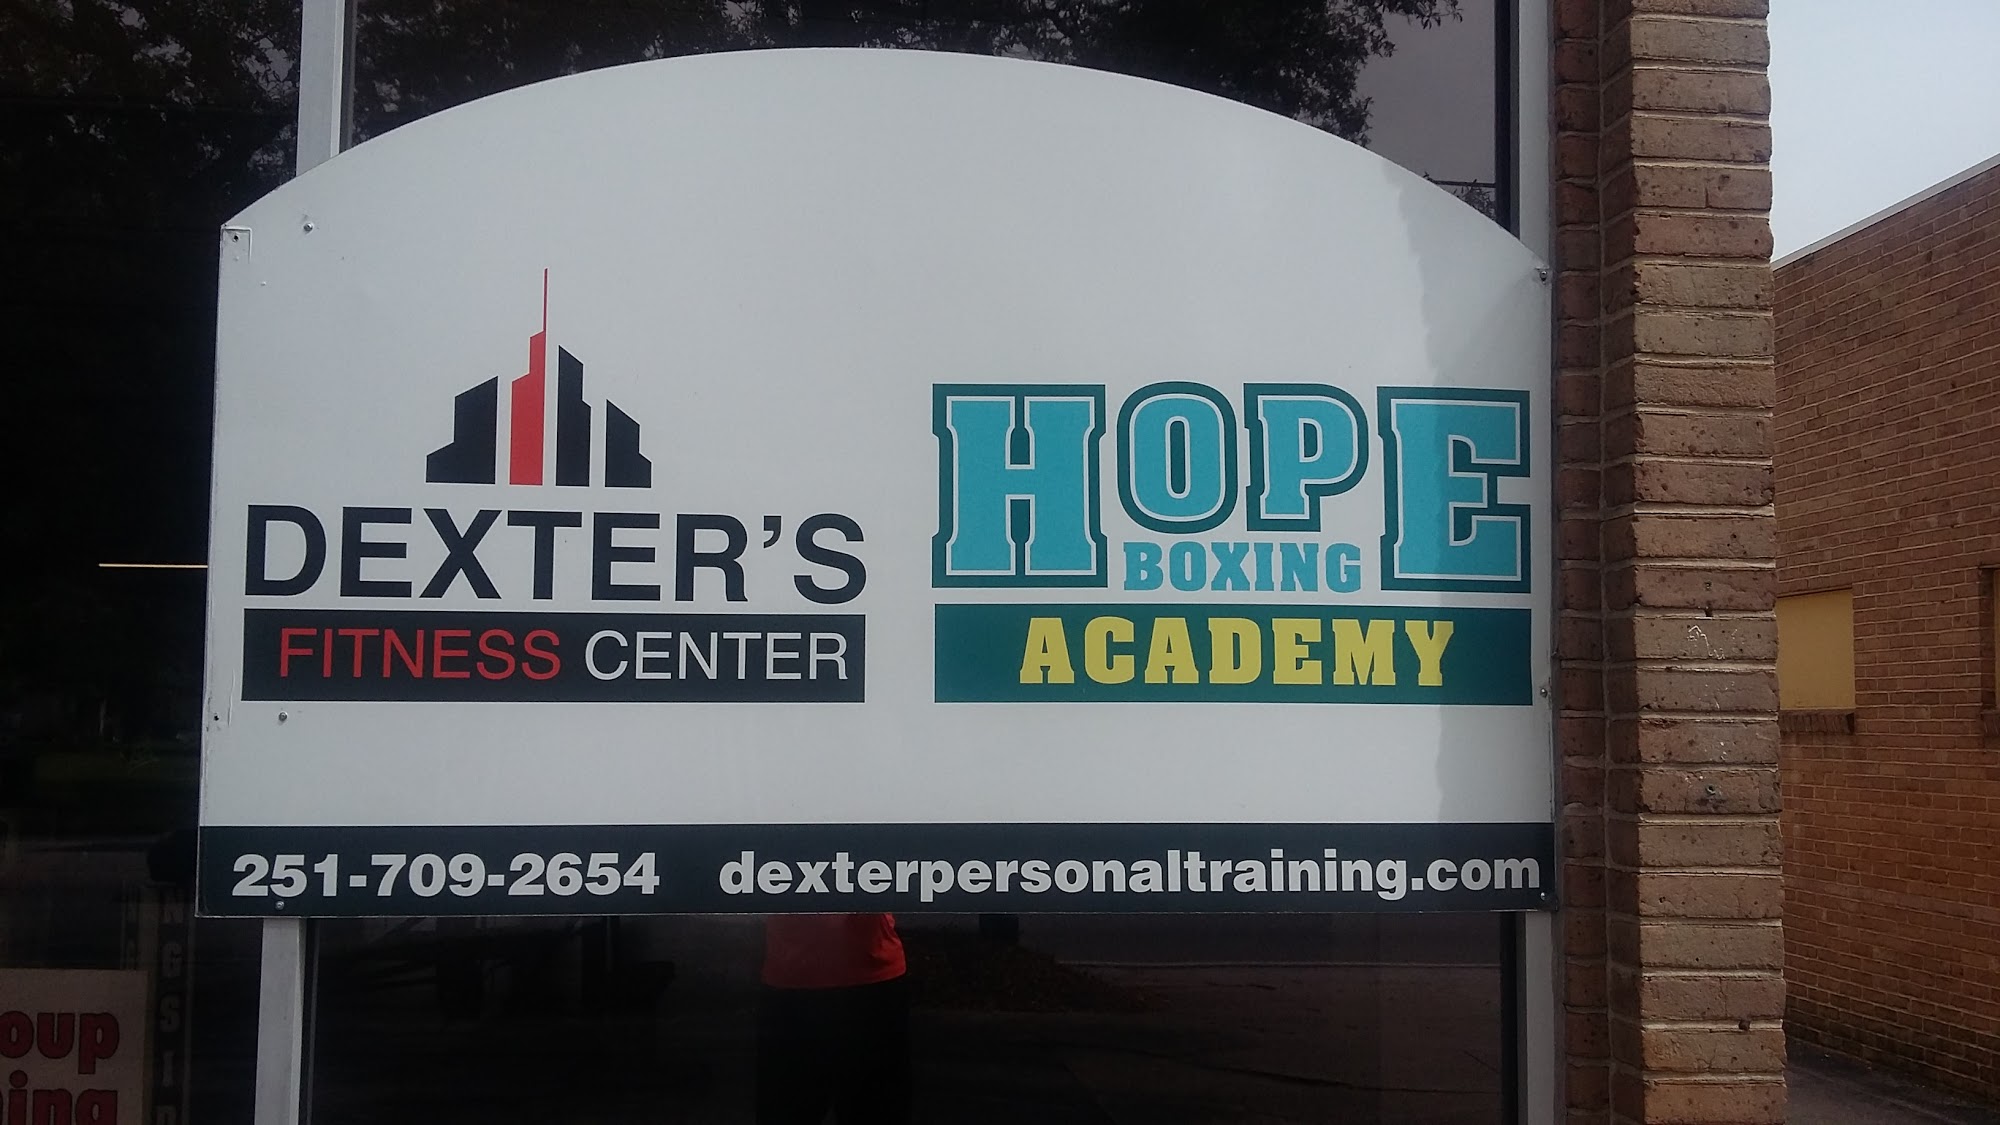 Dexter's Fitness Center